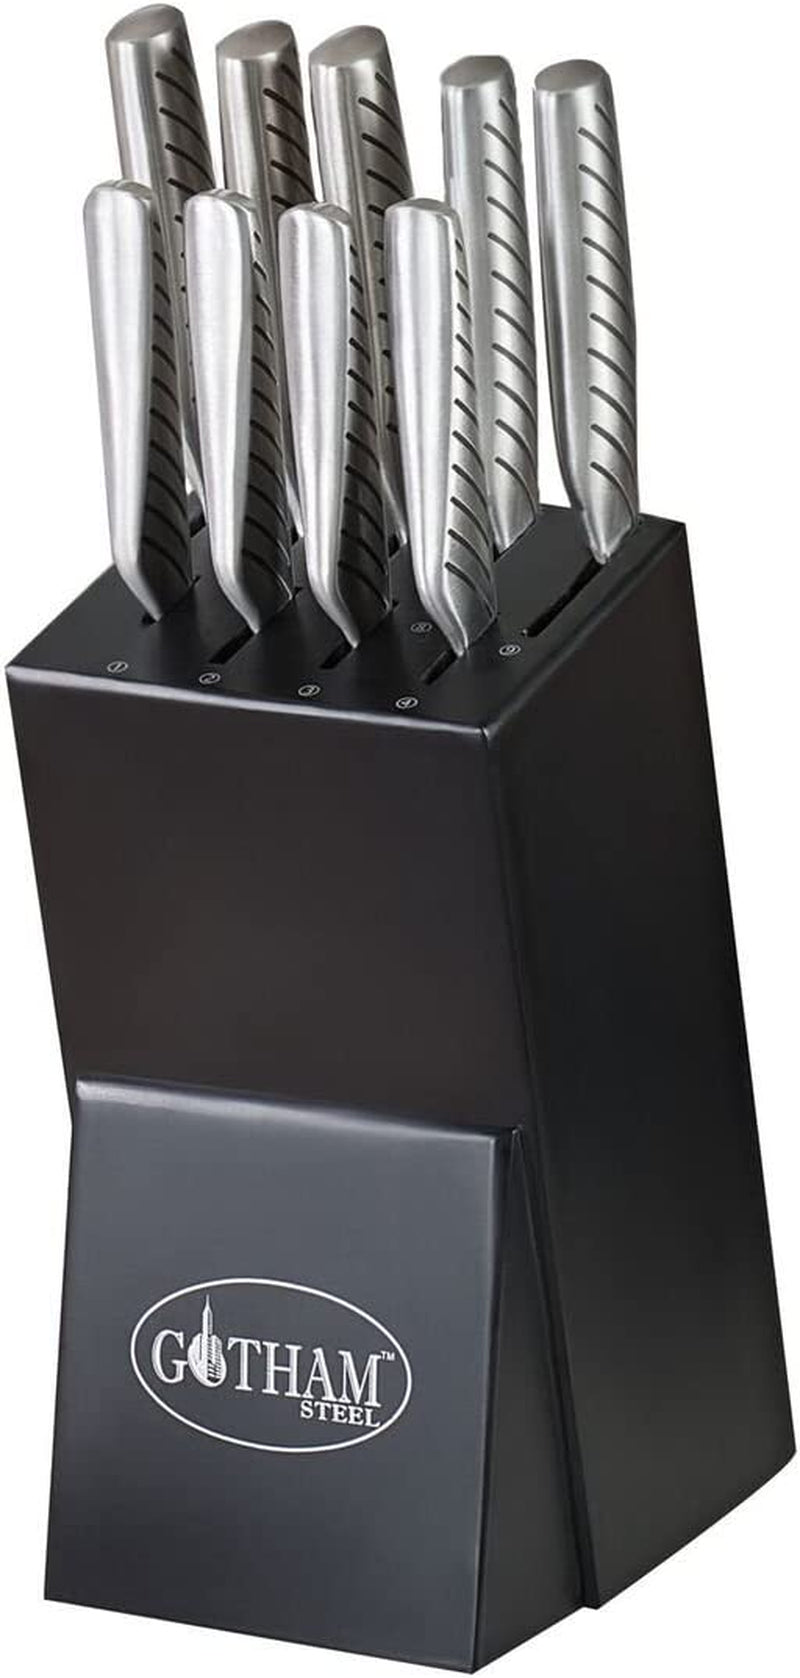 Gotham Steel 10 Piece Knife, 10Piece Set, Stainless Steel